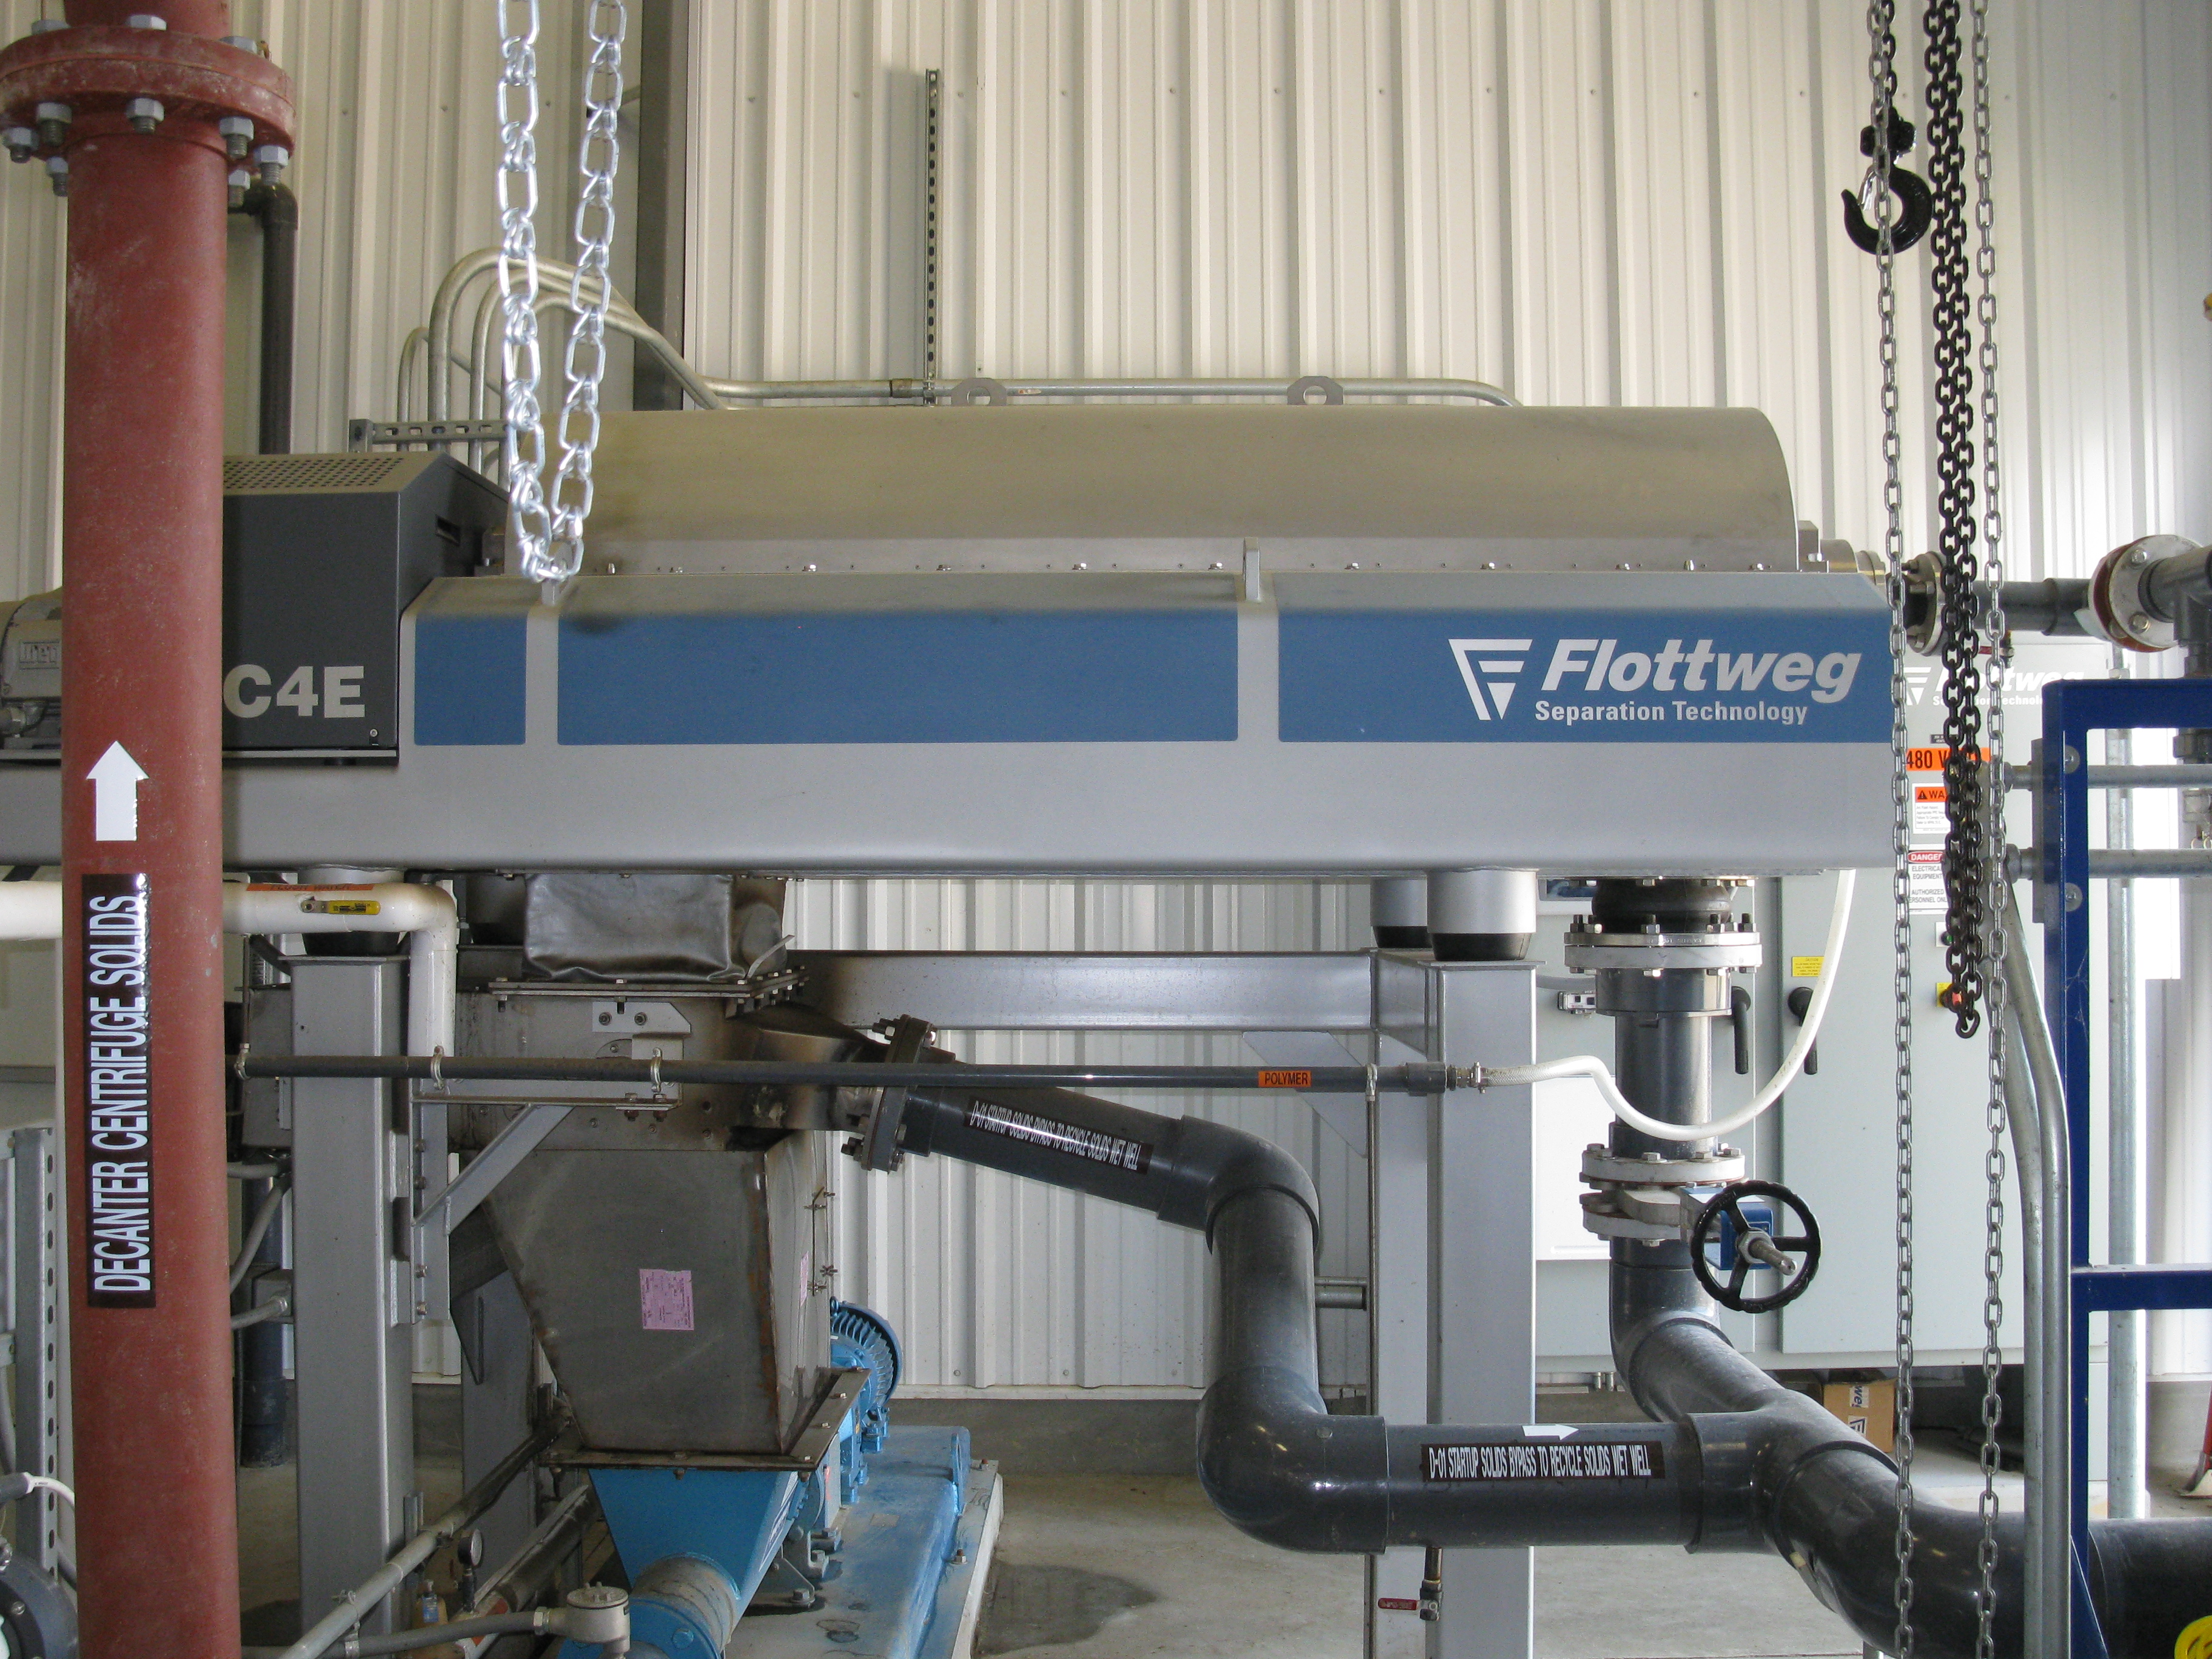 Picture of Flottweg separation technology